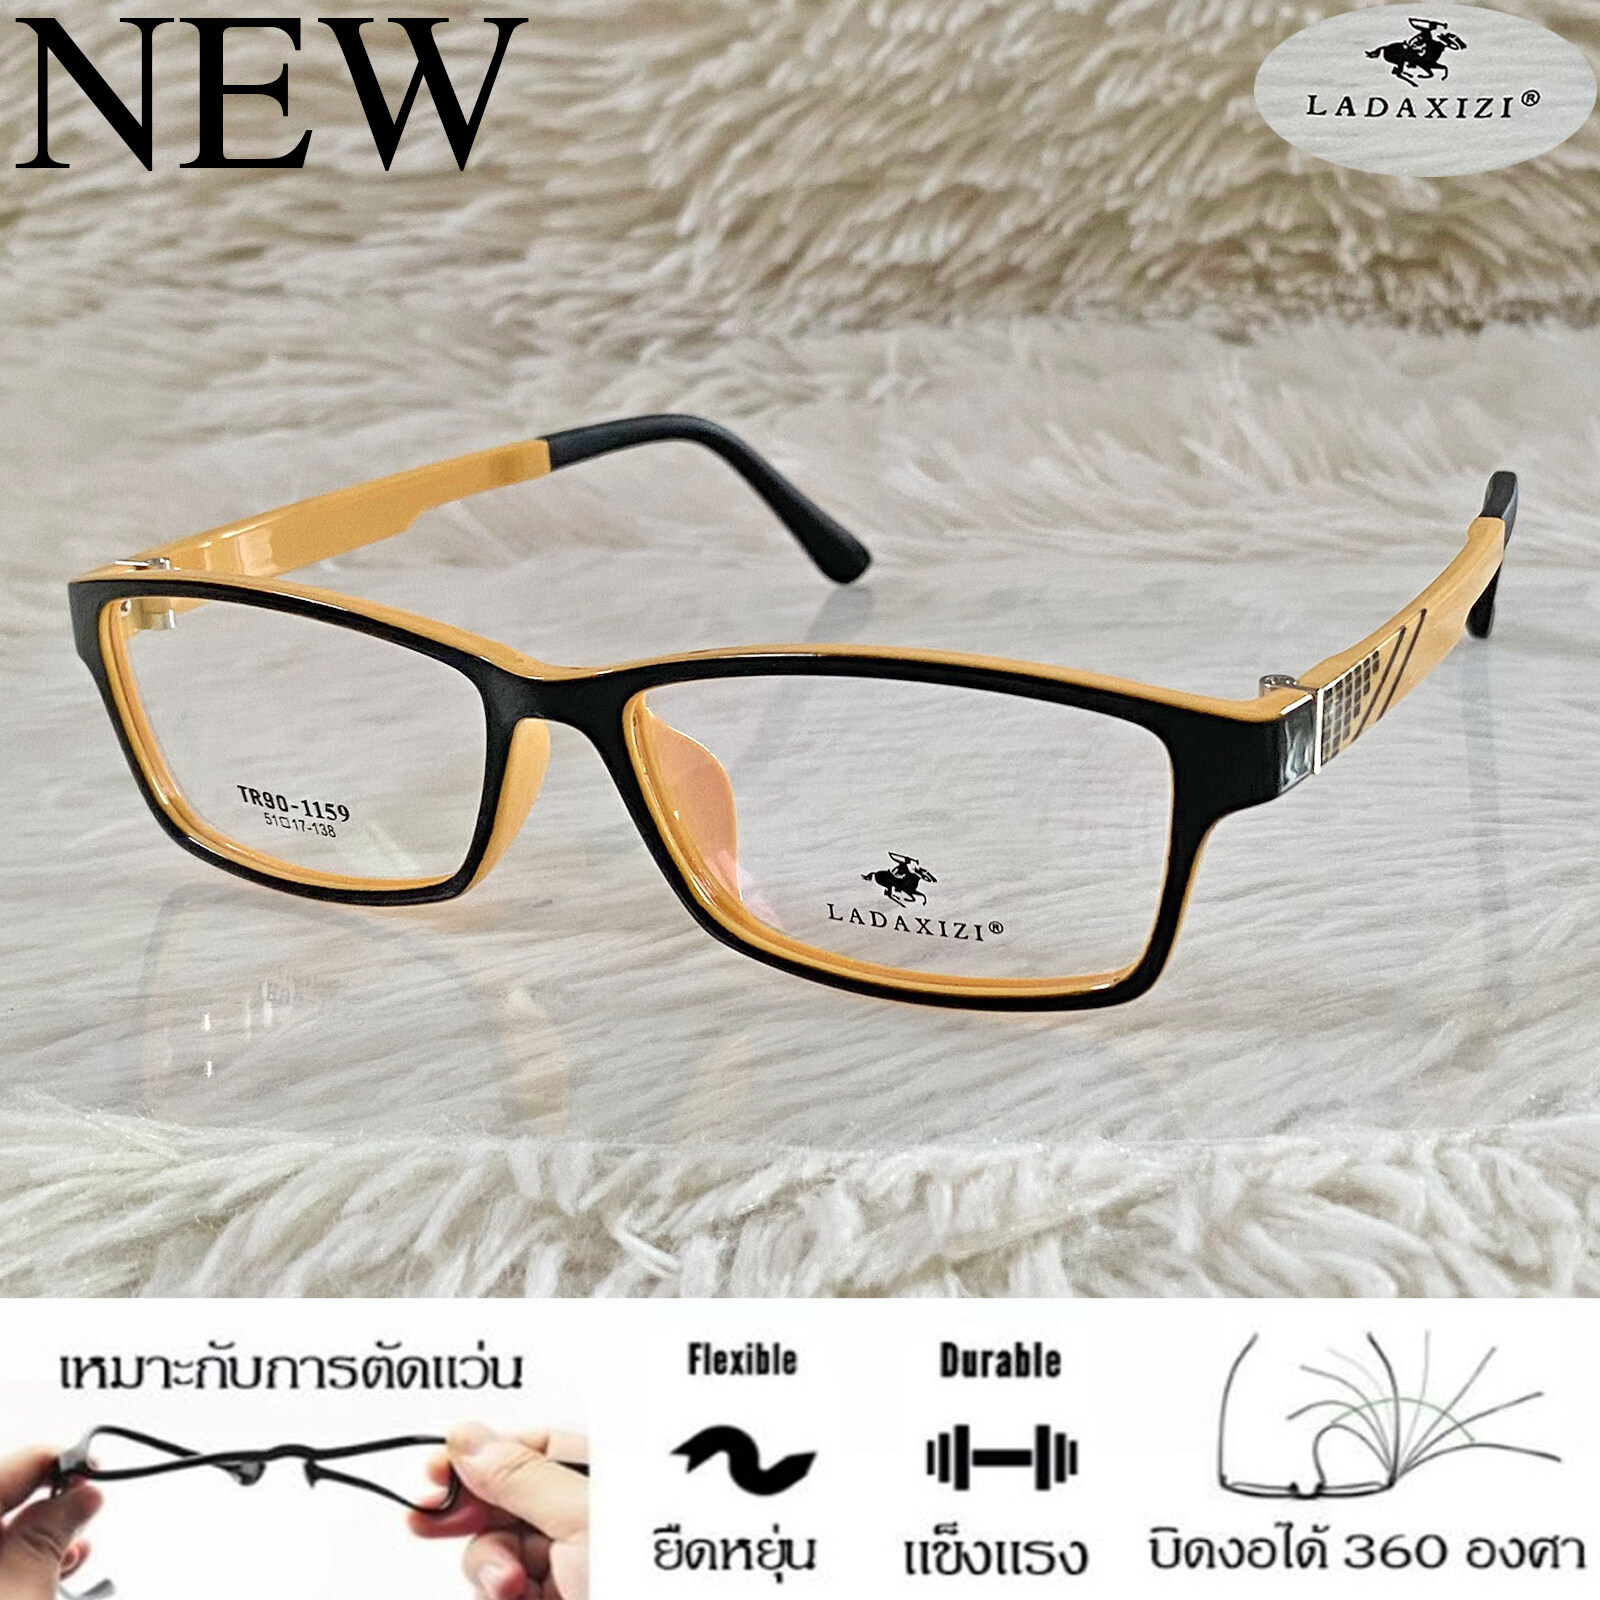 TR 90 กรอบแว่นตา สำหรับตัดเลนส์ แว่นตา Fashion ชาย-หญิง รุ่น LADAXIZI 11599 สีดำตัดส้ม กรอบเต็ม ทรงเหลี่ยม ขาข้อต่อ ทนความร้อนสูง รับตัดเลนส์ ทุกชนิด